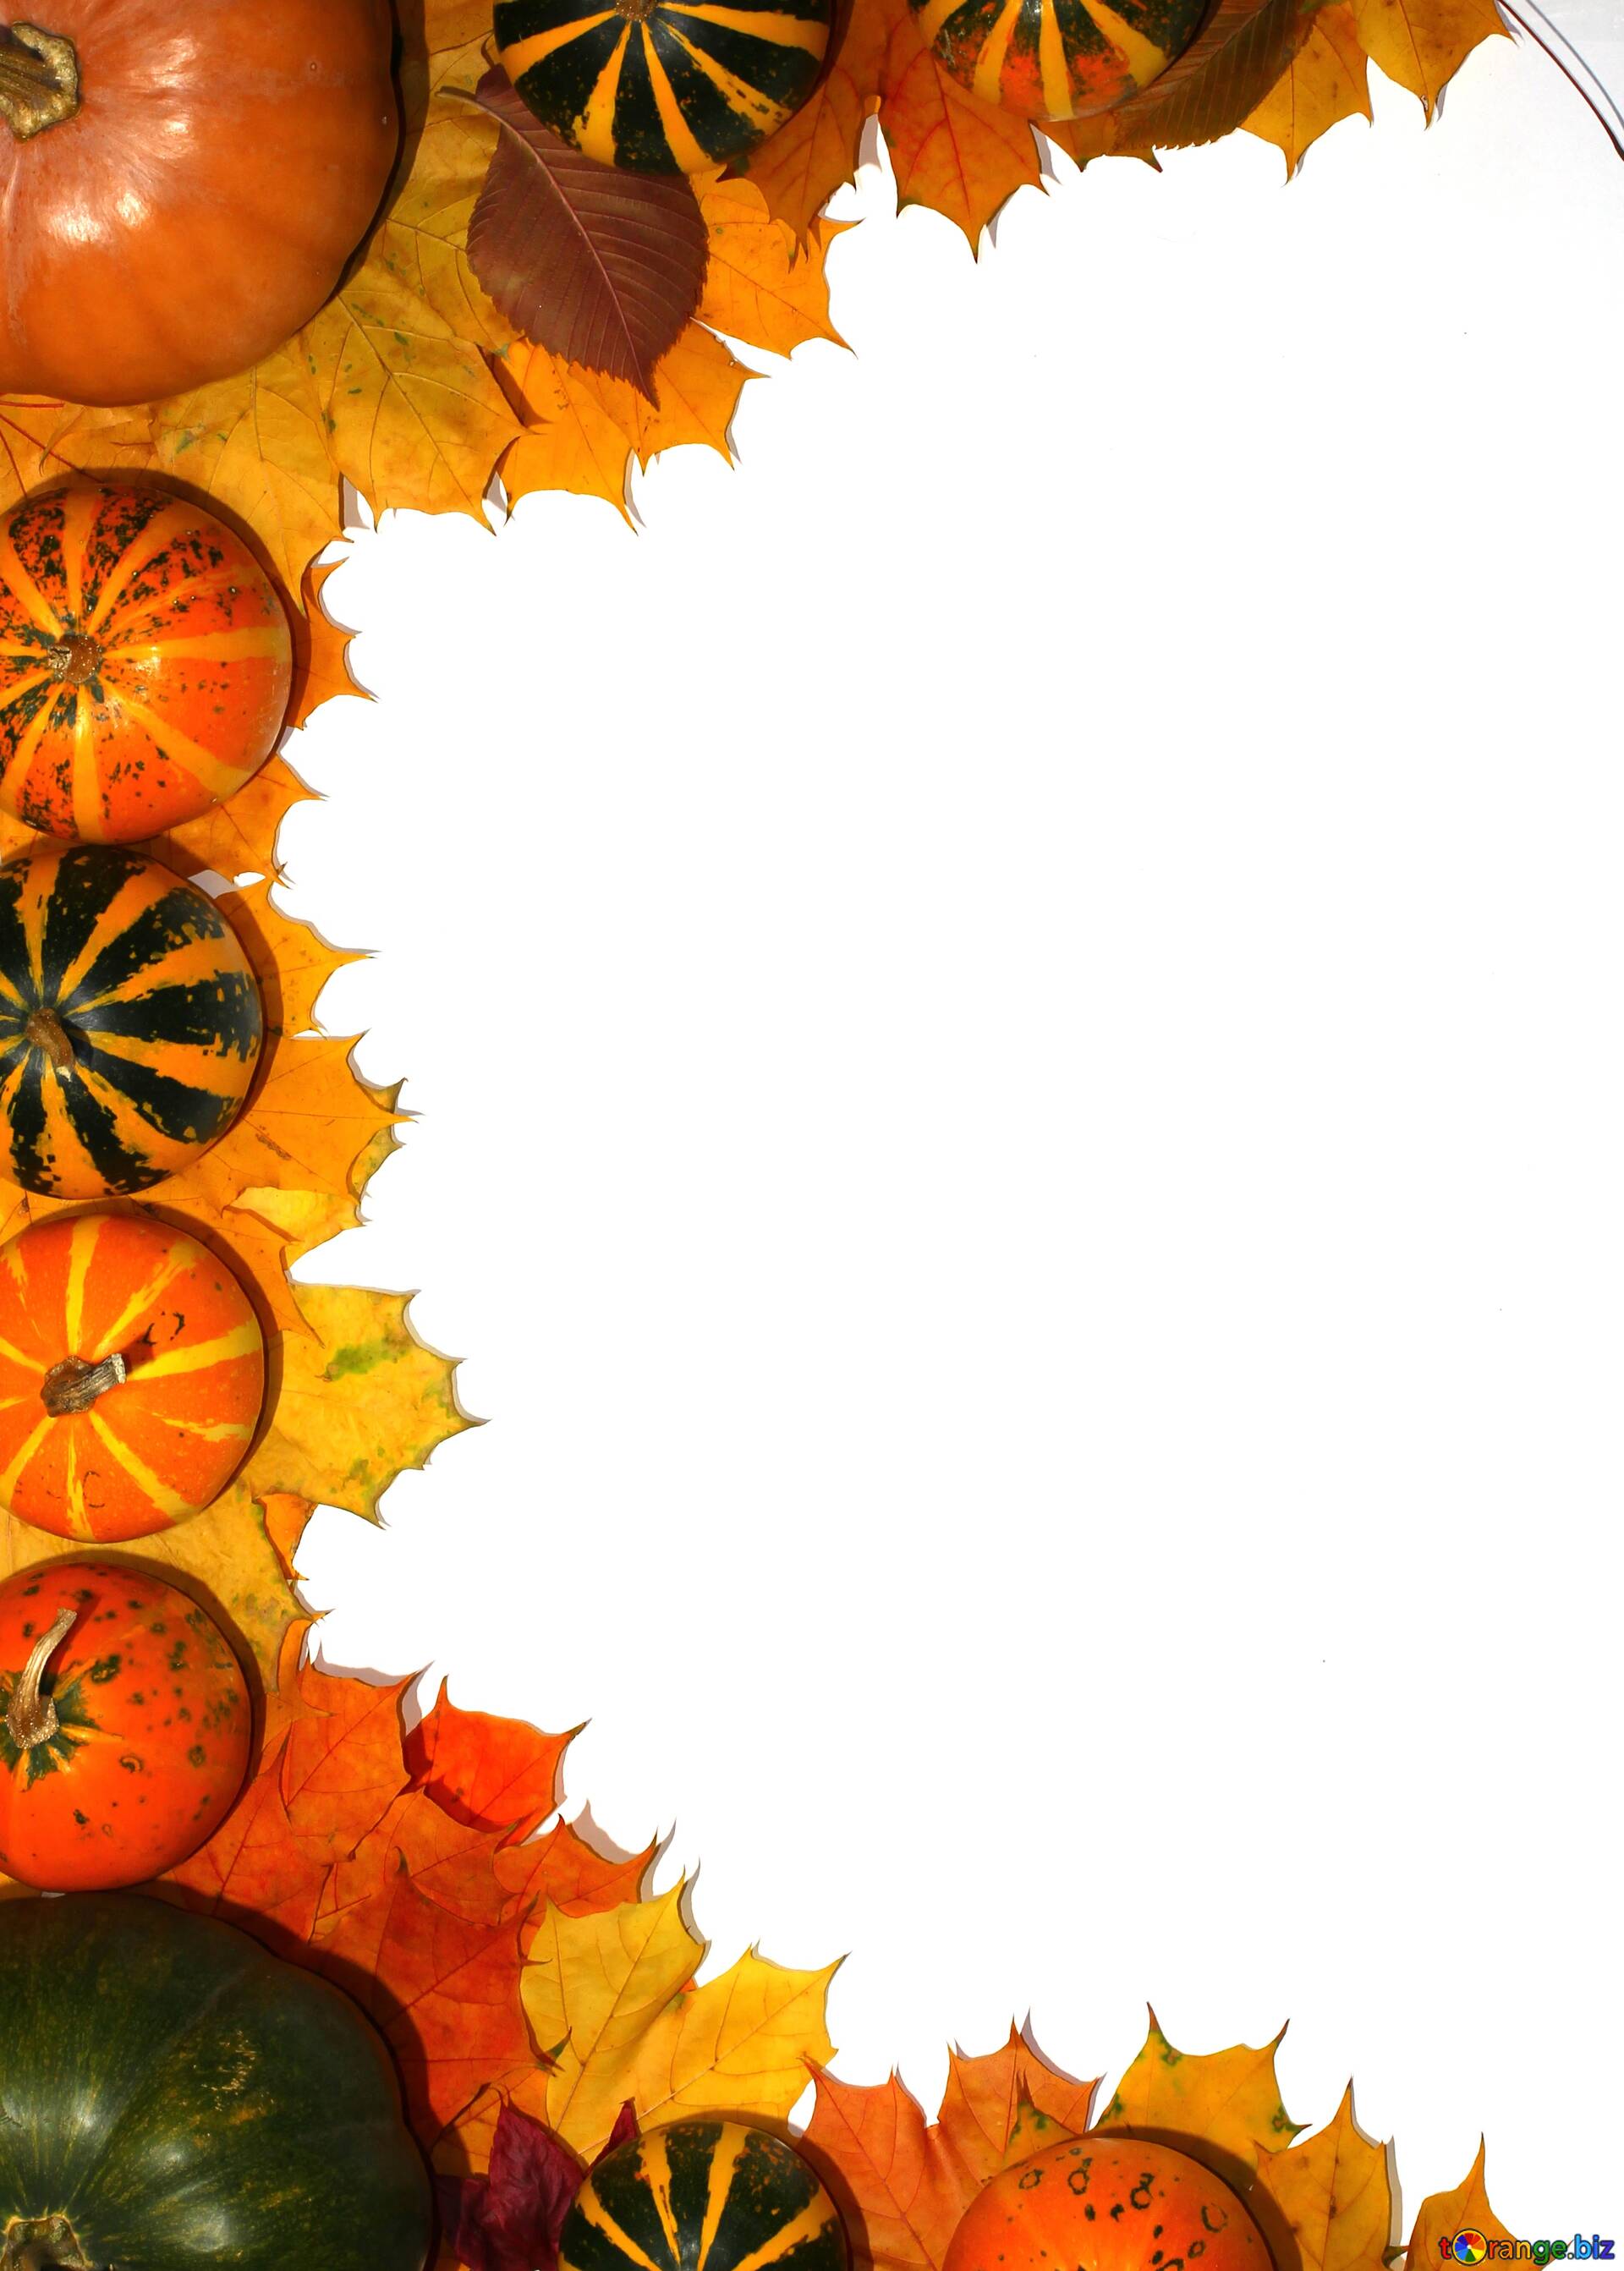 Download Free Picture Autumn Frame Border Pumpkins On CC BY License Free Image Stock TOrange.biz Fx №34704